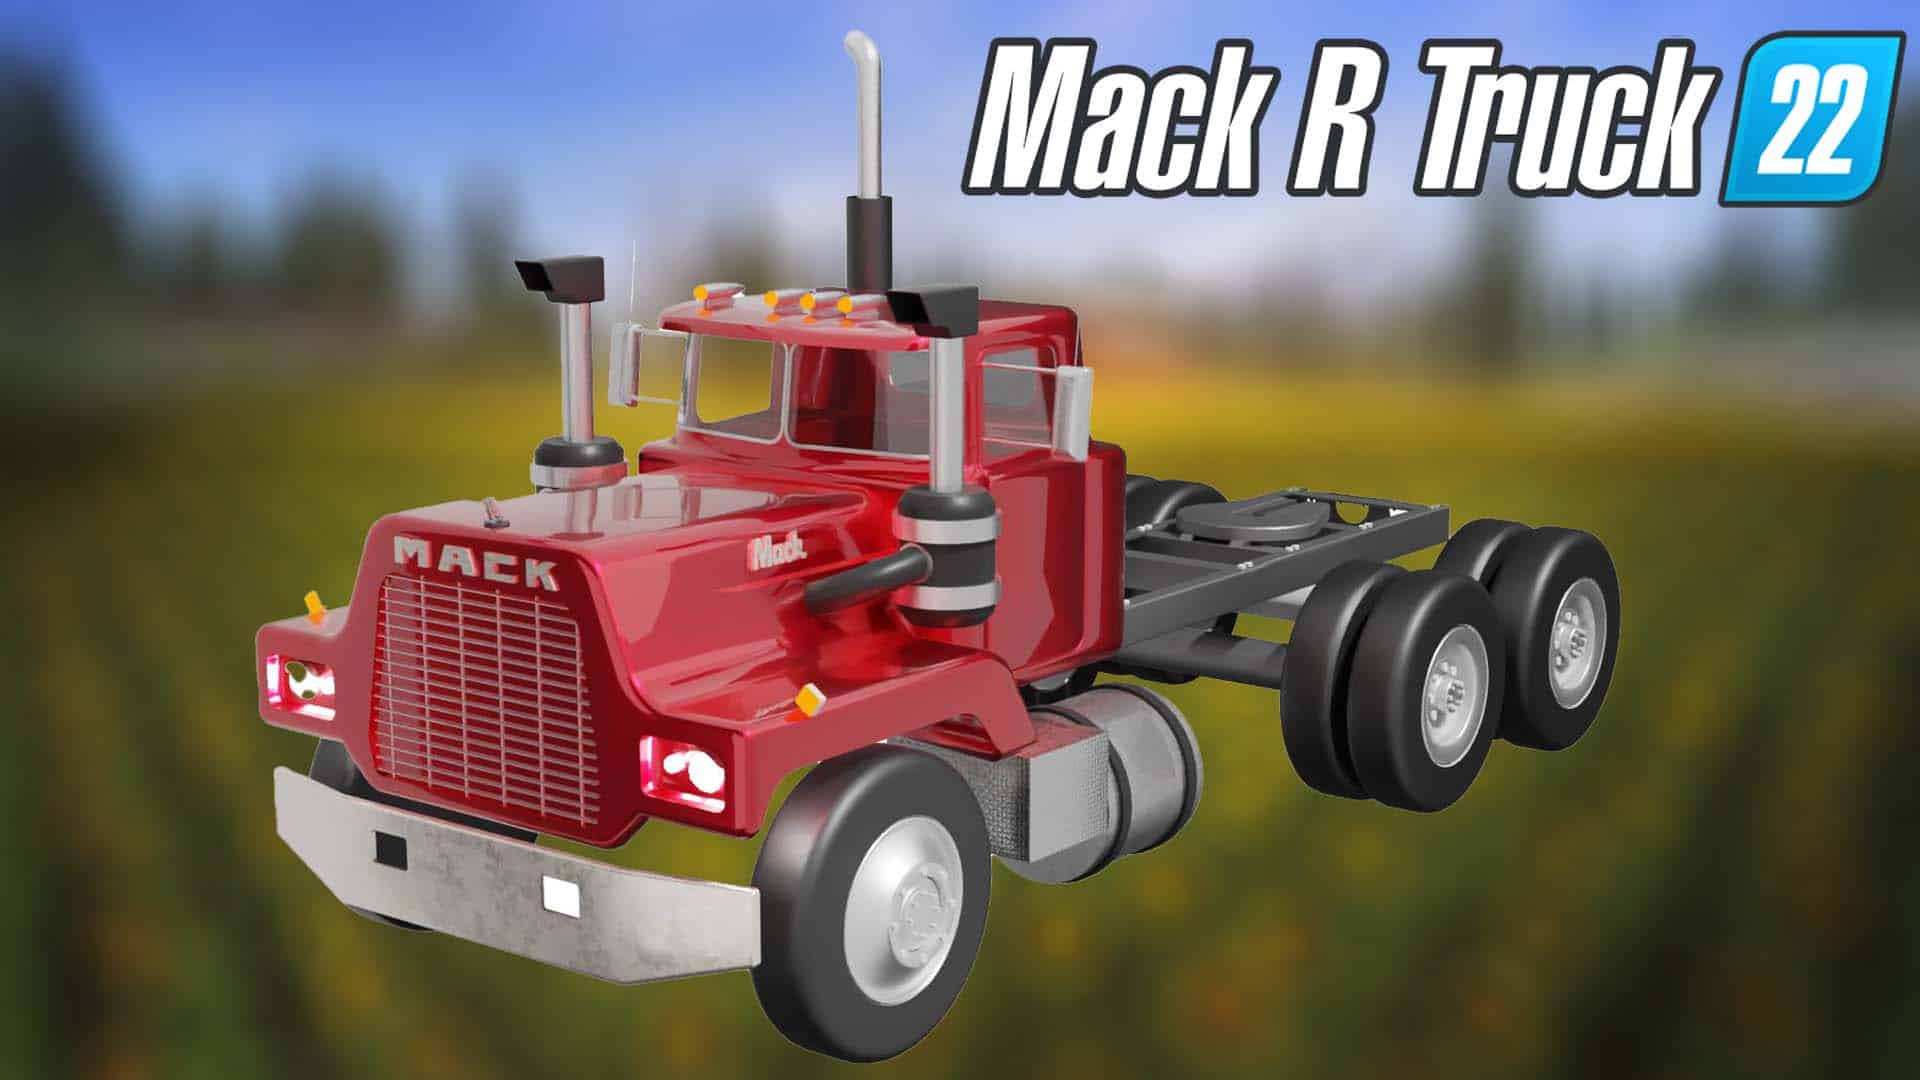 LS22 Mack R Truck Cover